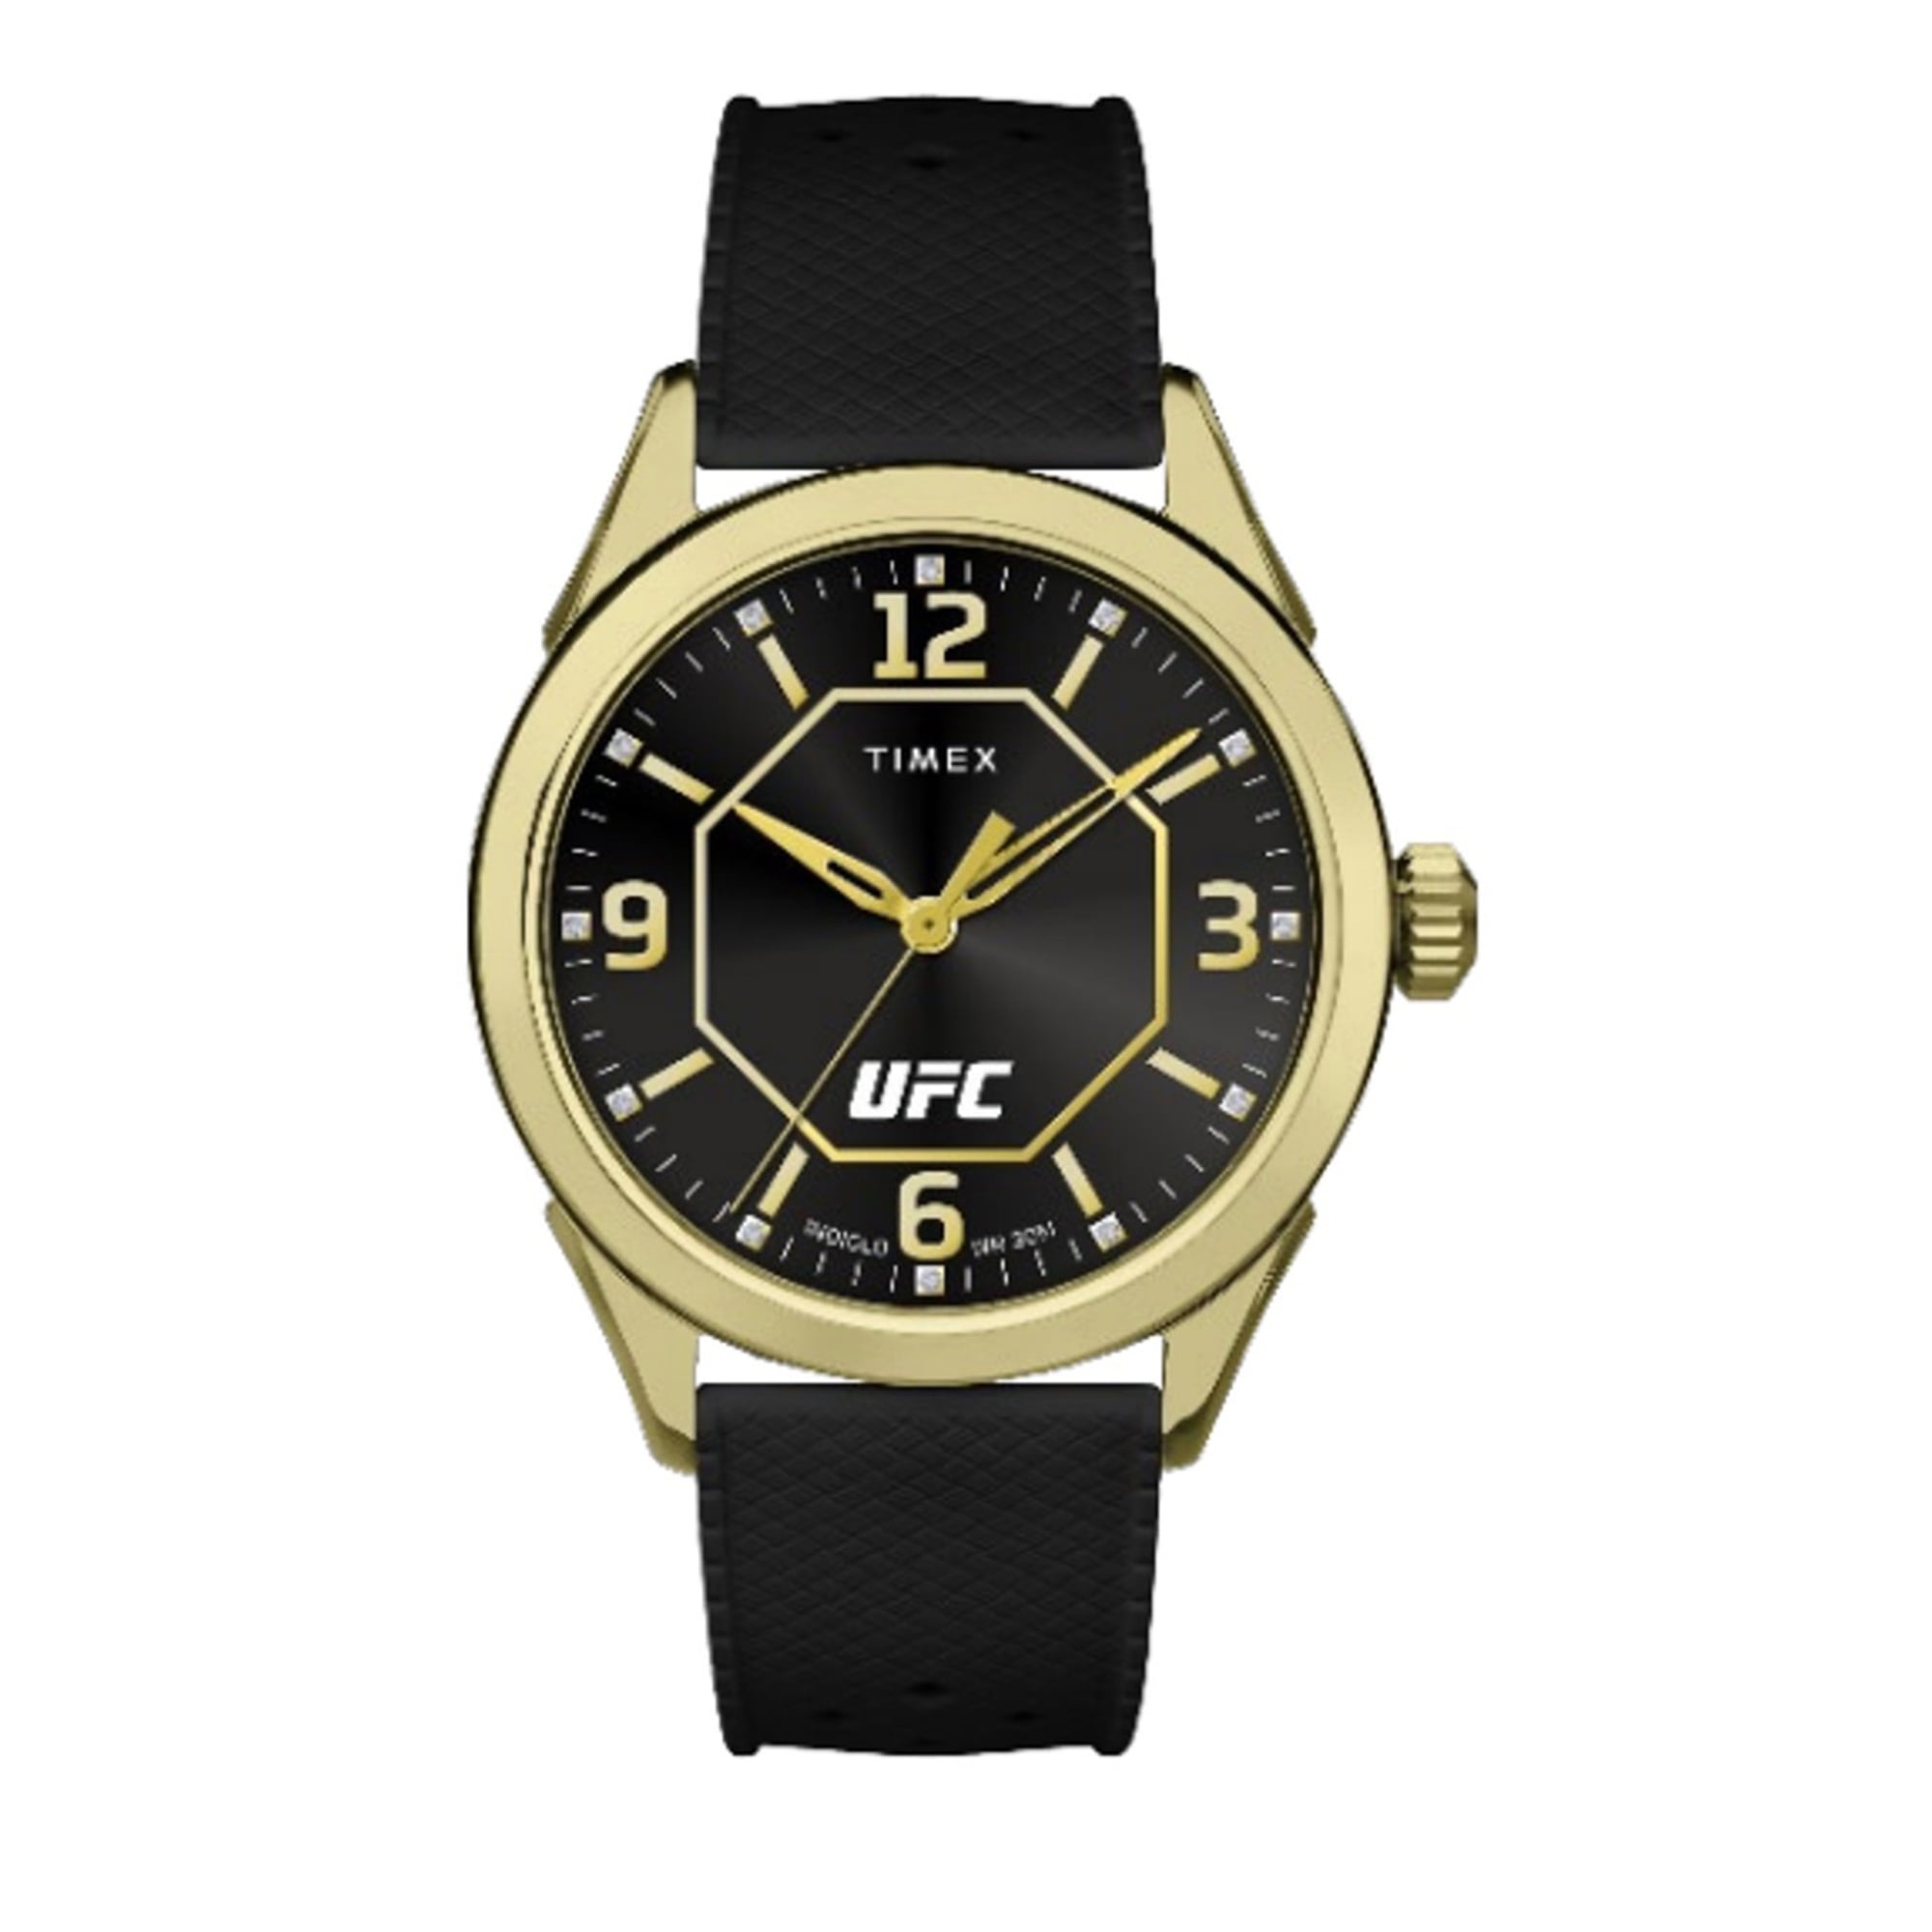 Timex UFC Men's Athena 42mm Watch - Black Strap Black Dial Gold-Tone Case